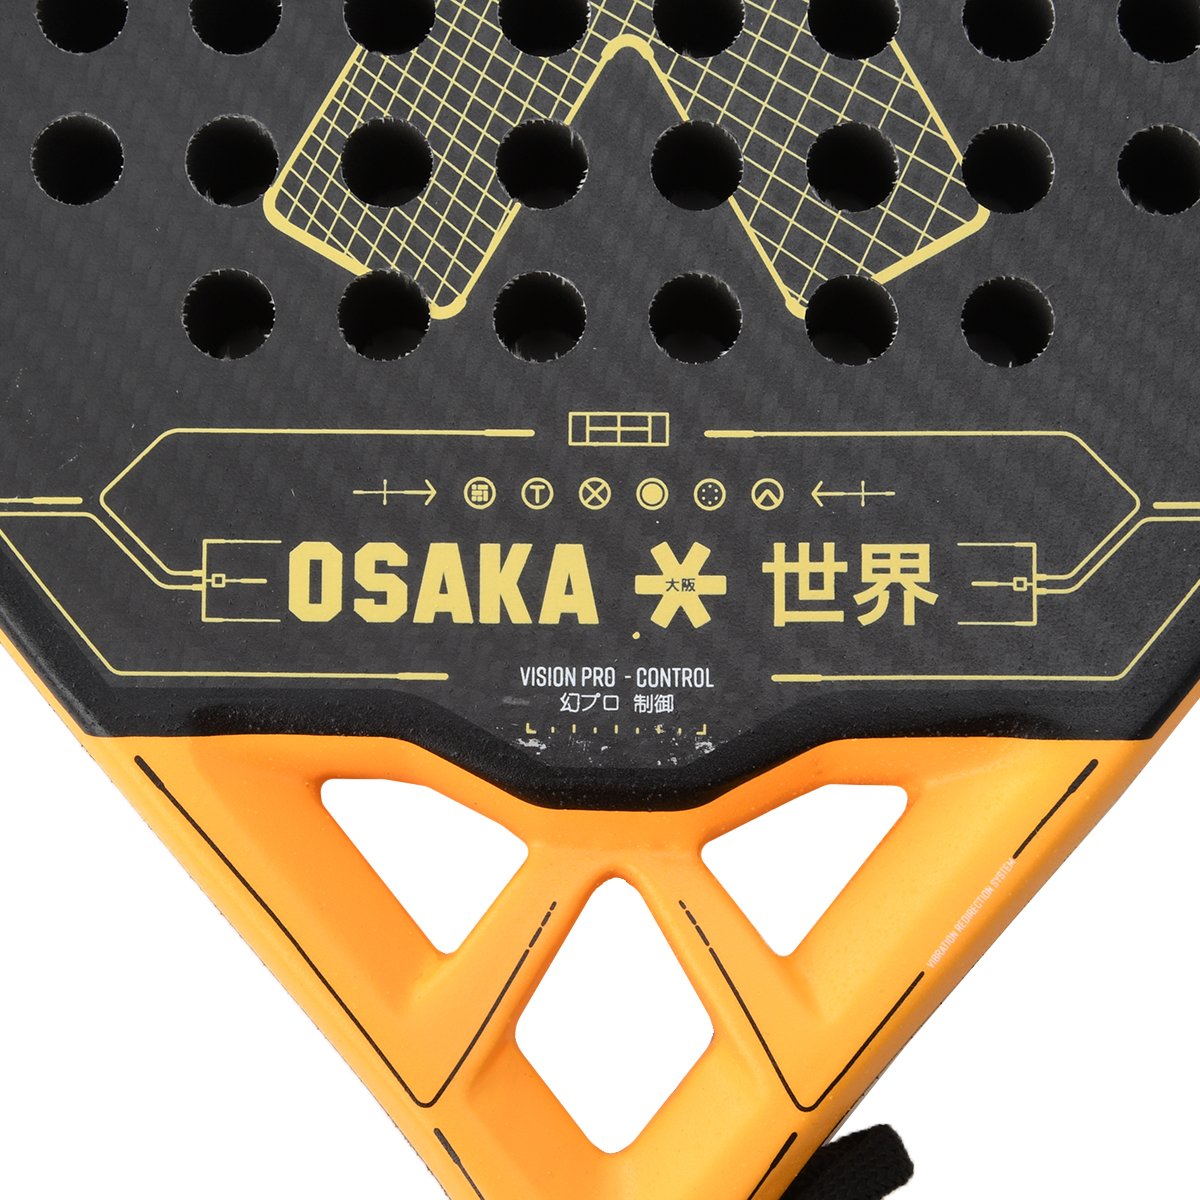 Paleta Osaka Vision Pro Control,  image number null